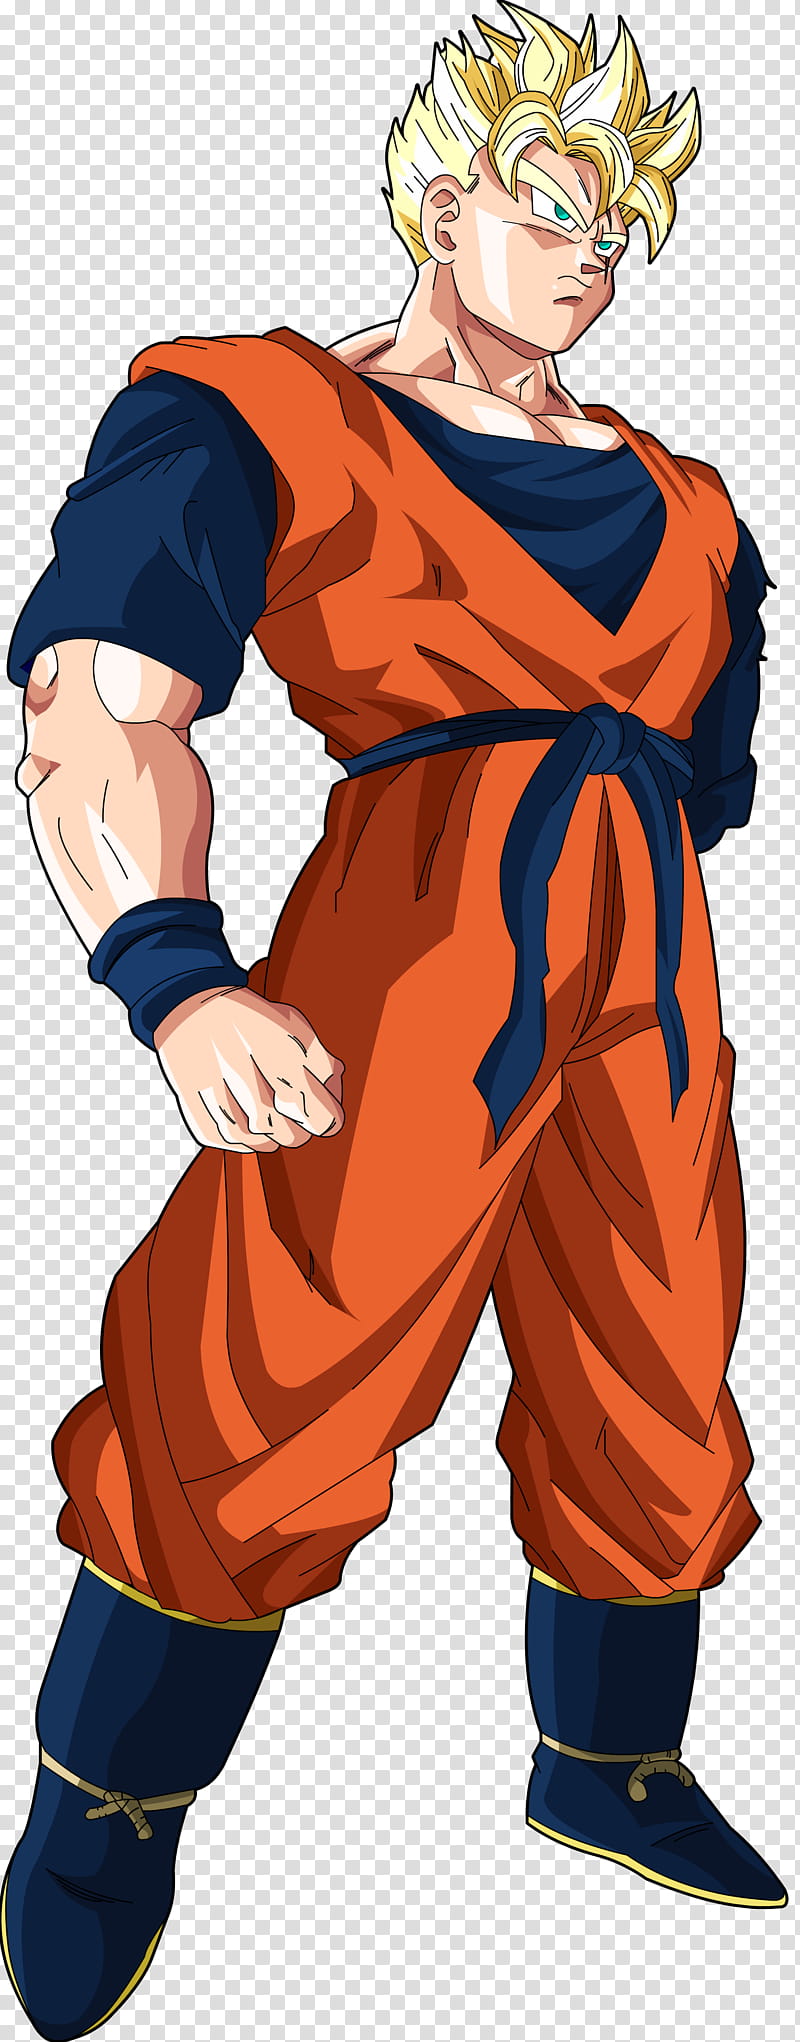 Gohan del futuro Dragon Ball Super, Dragon Ball Z character illustration transparent background PNG clipart